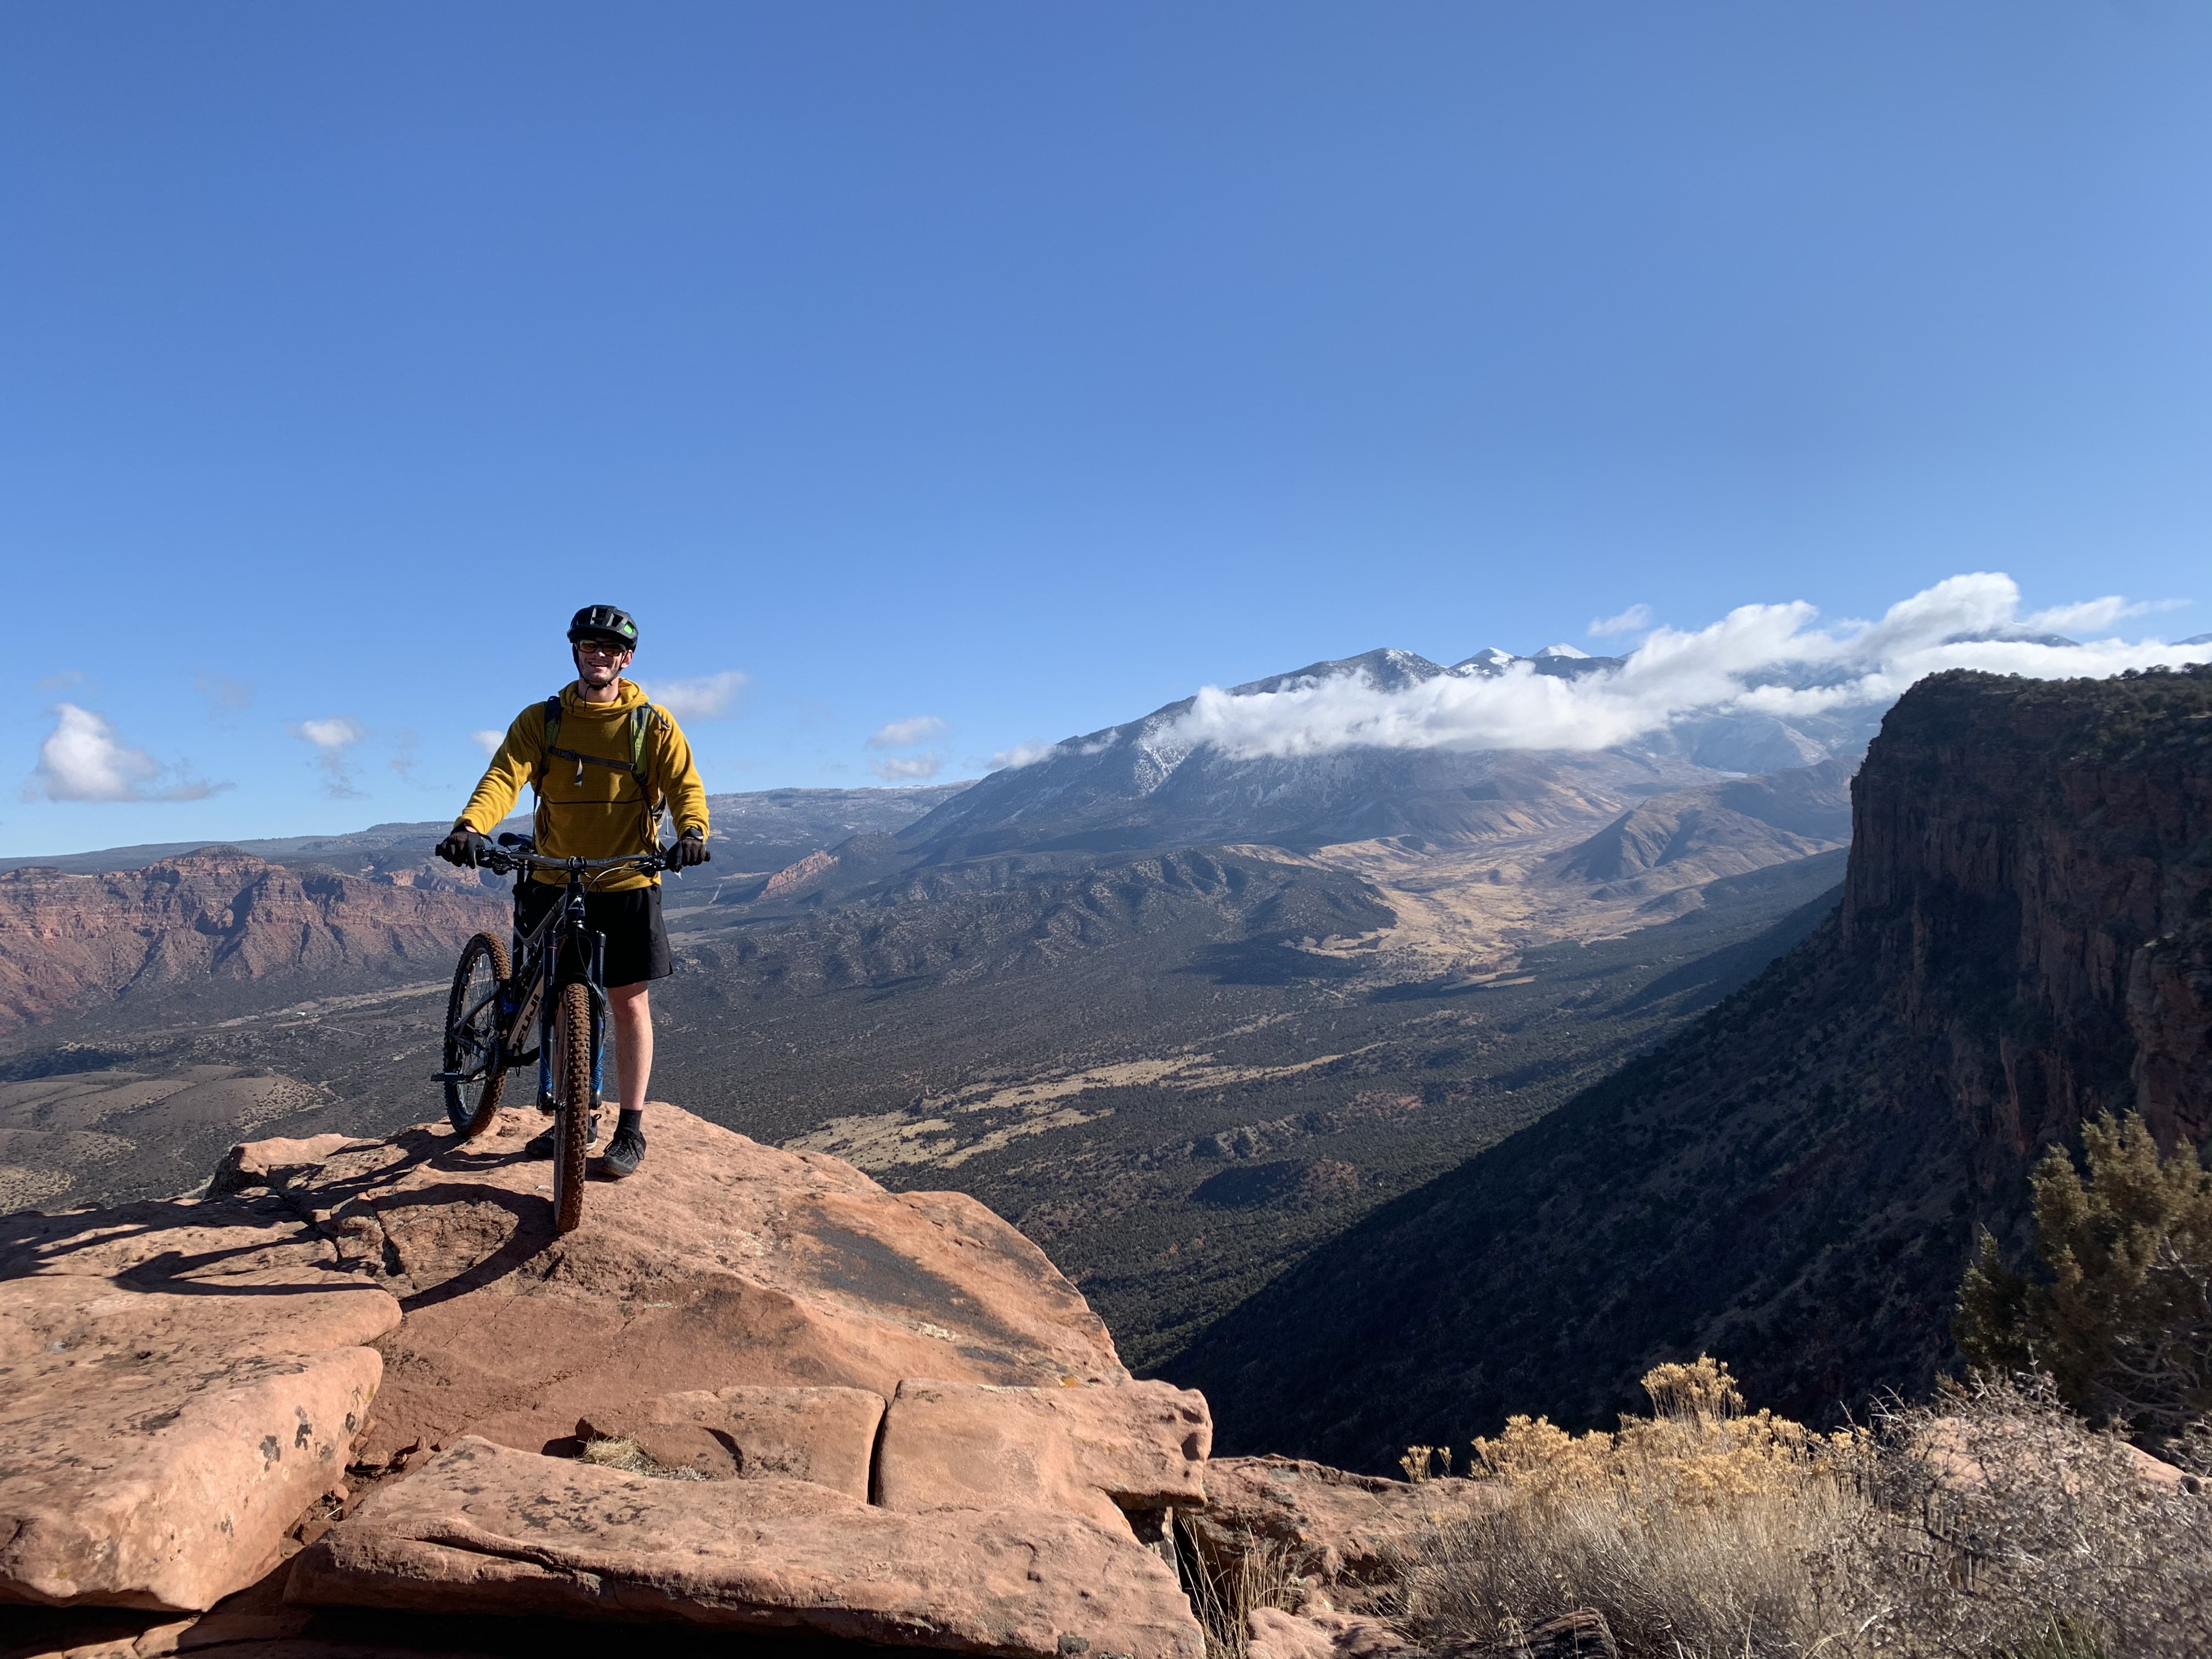 Michael Mountain Biking the Porcupine Rim Trail In Moab, Utah.